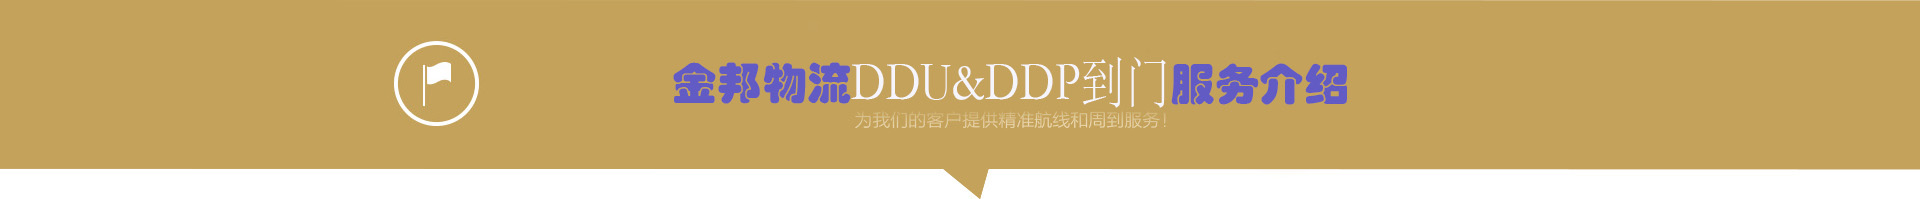 DDUDDP